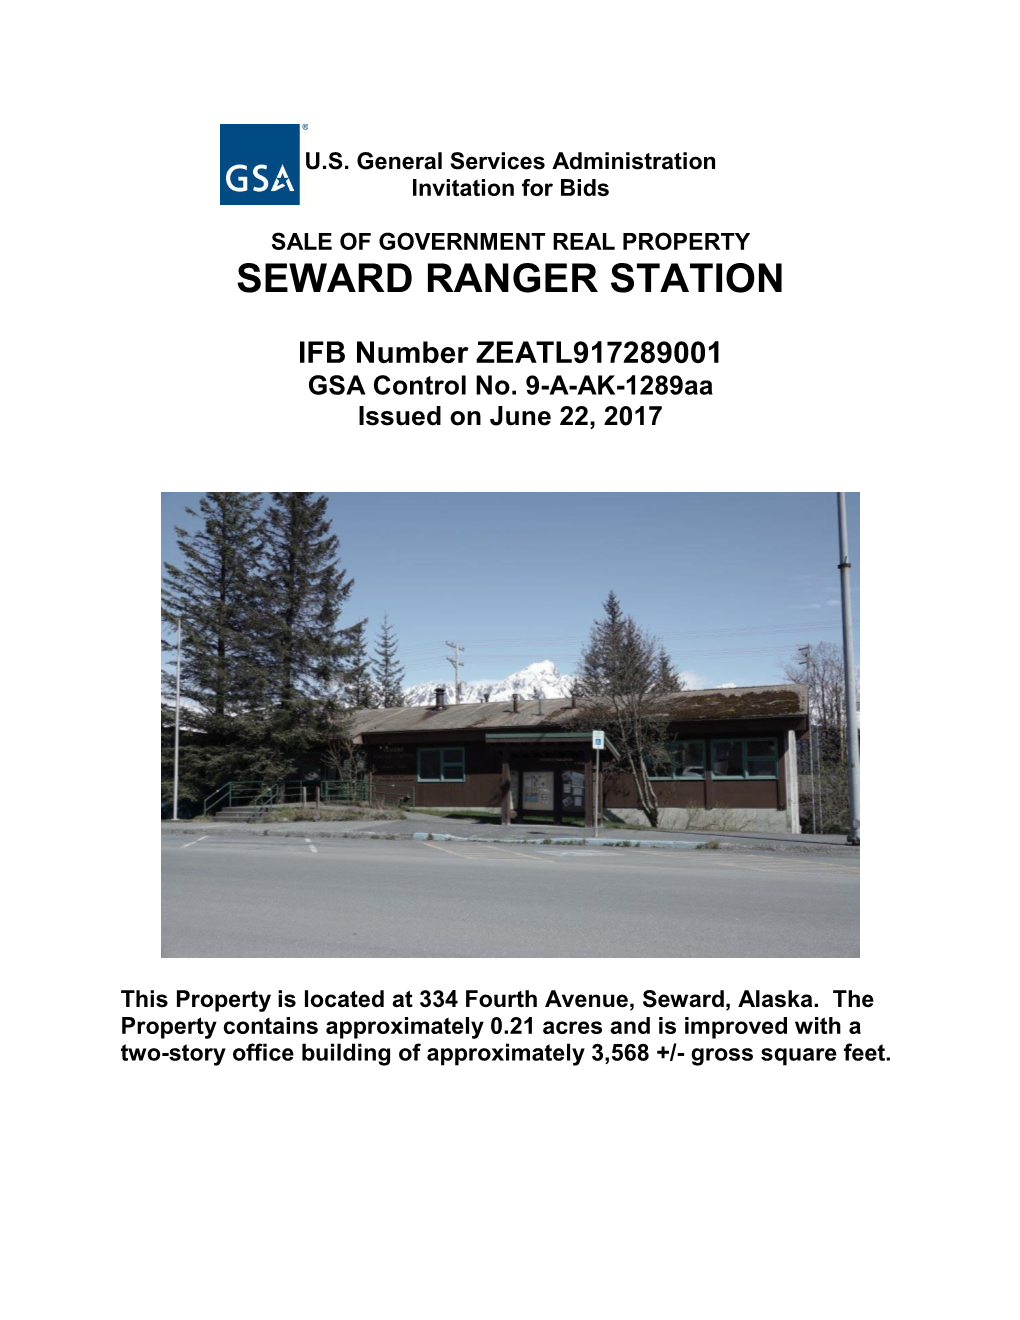 Seward Ranger Station